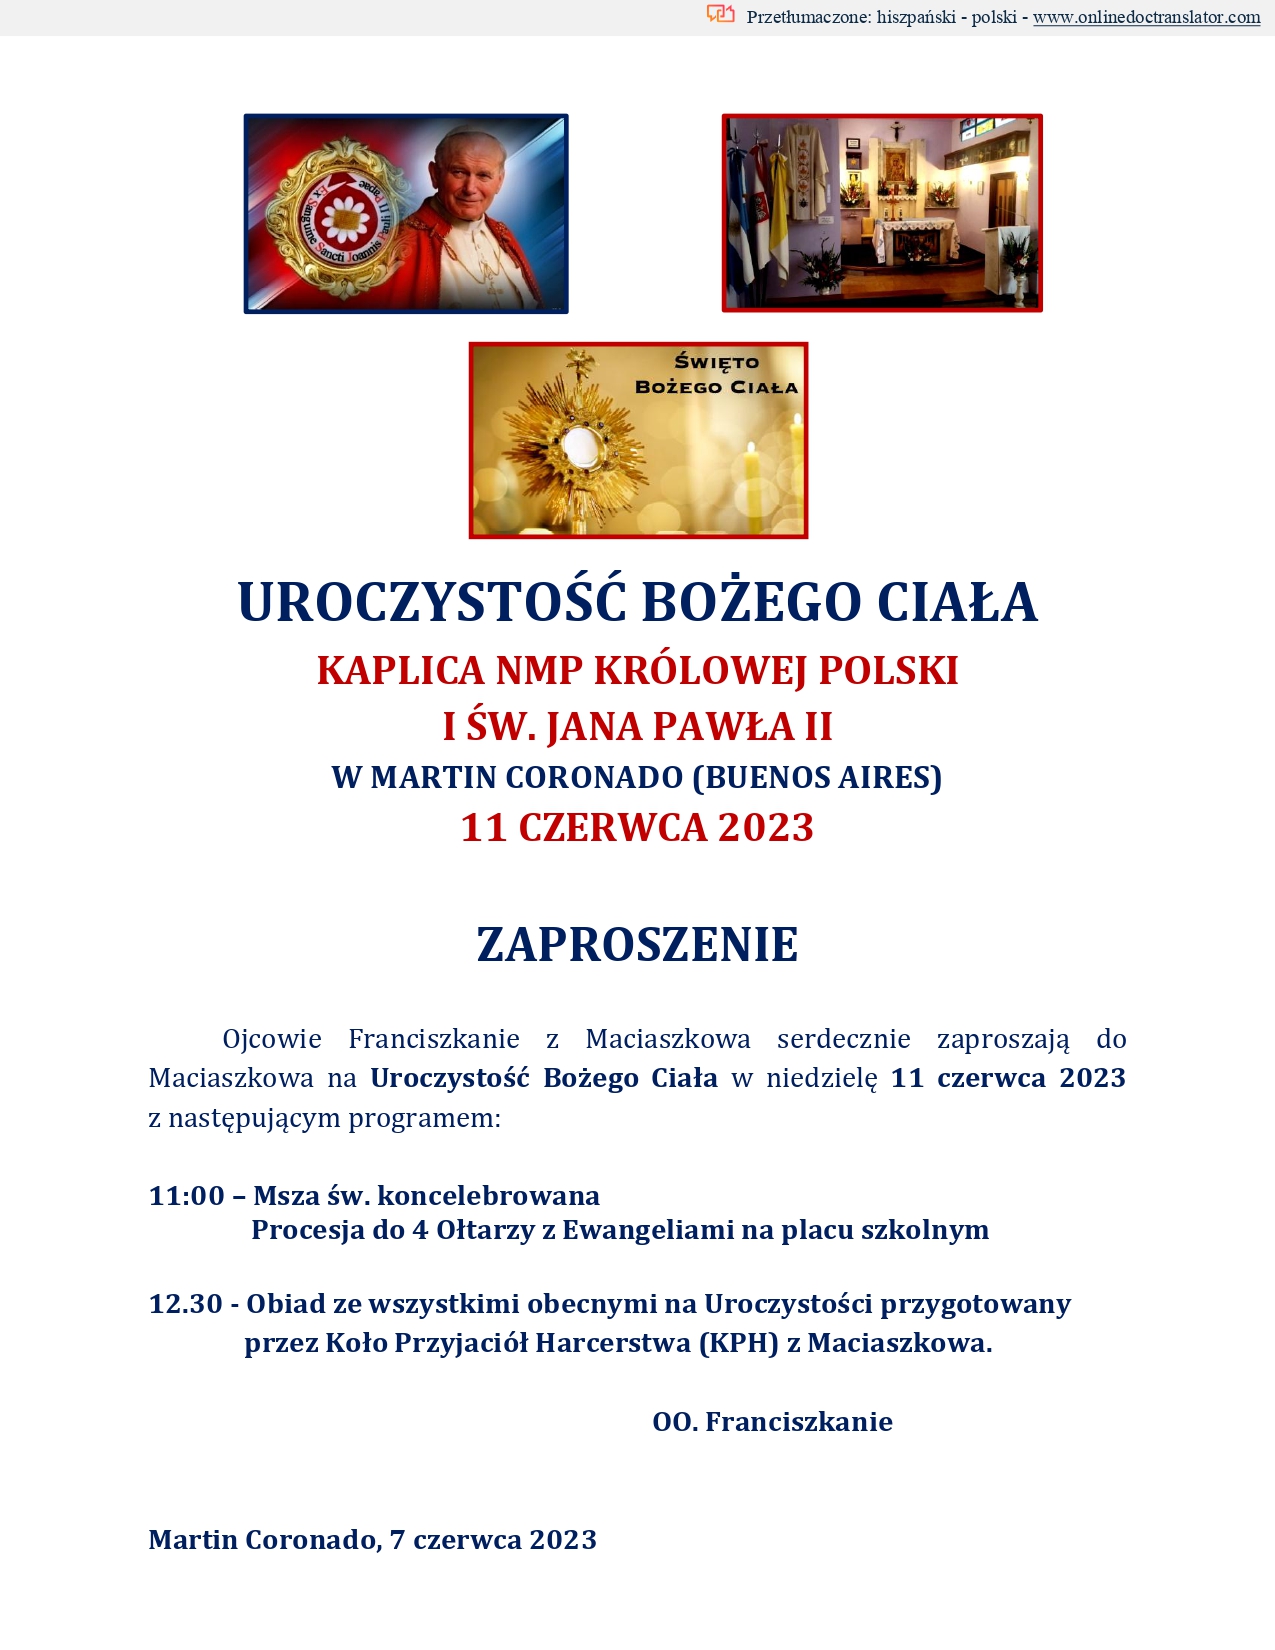 Celebración del Corpus Christi en Maciaszkowo